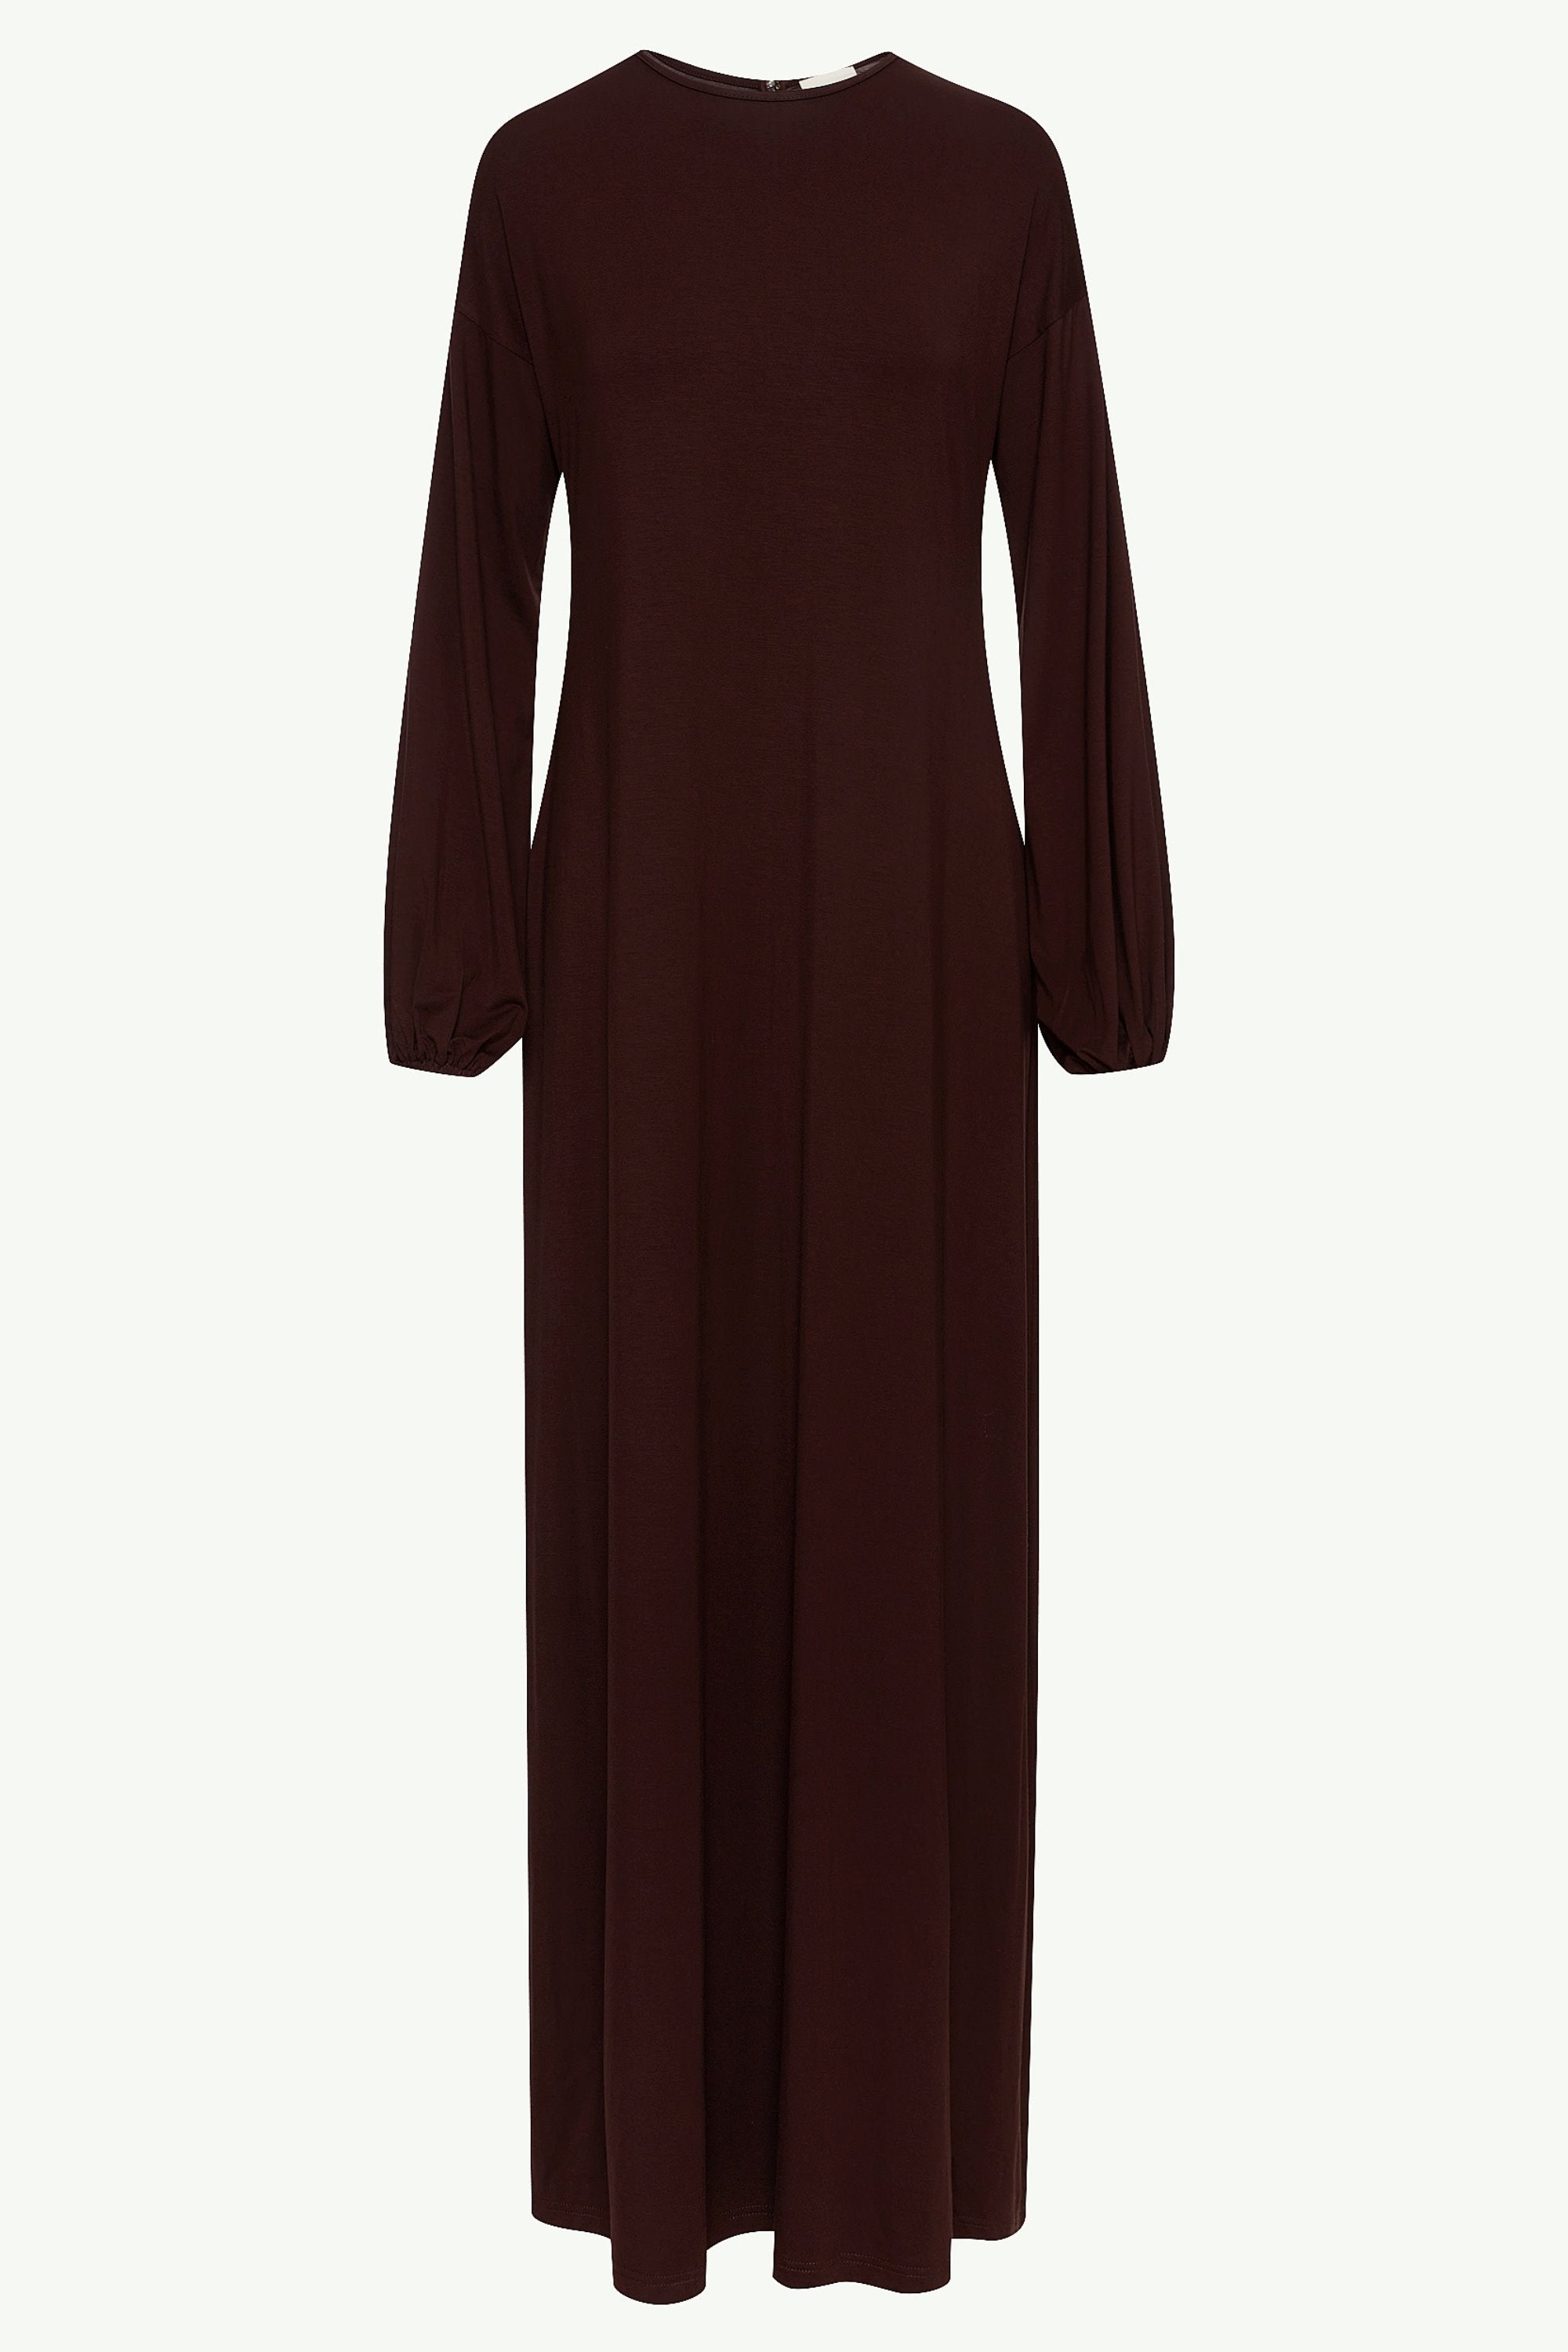 Afiyah Jersey Maxi Dress - Espresso Clothing epschoolboard 